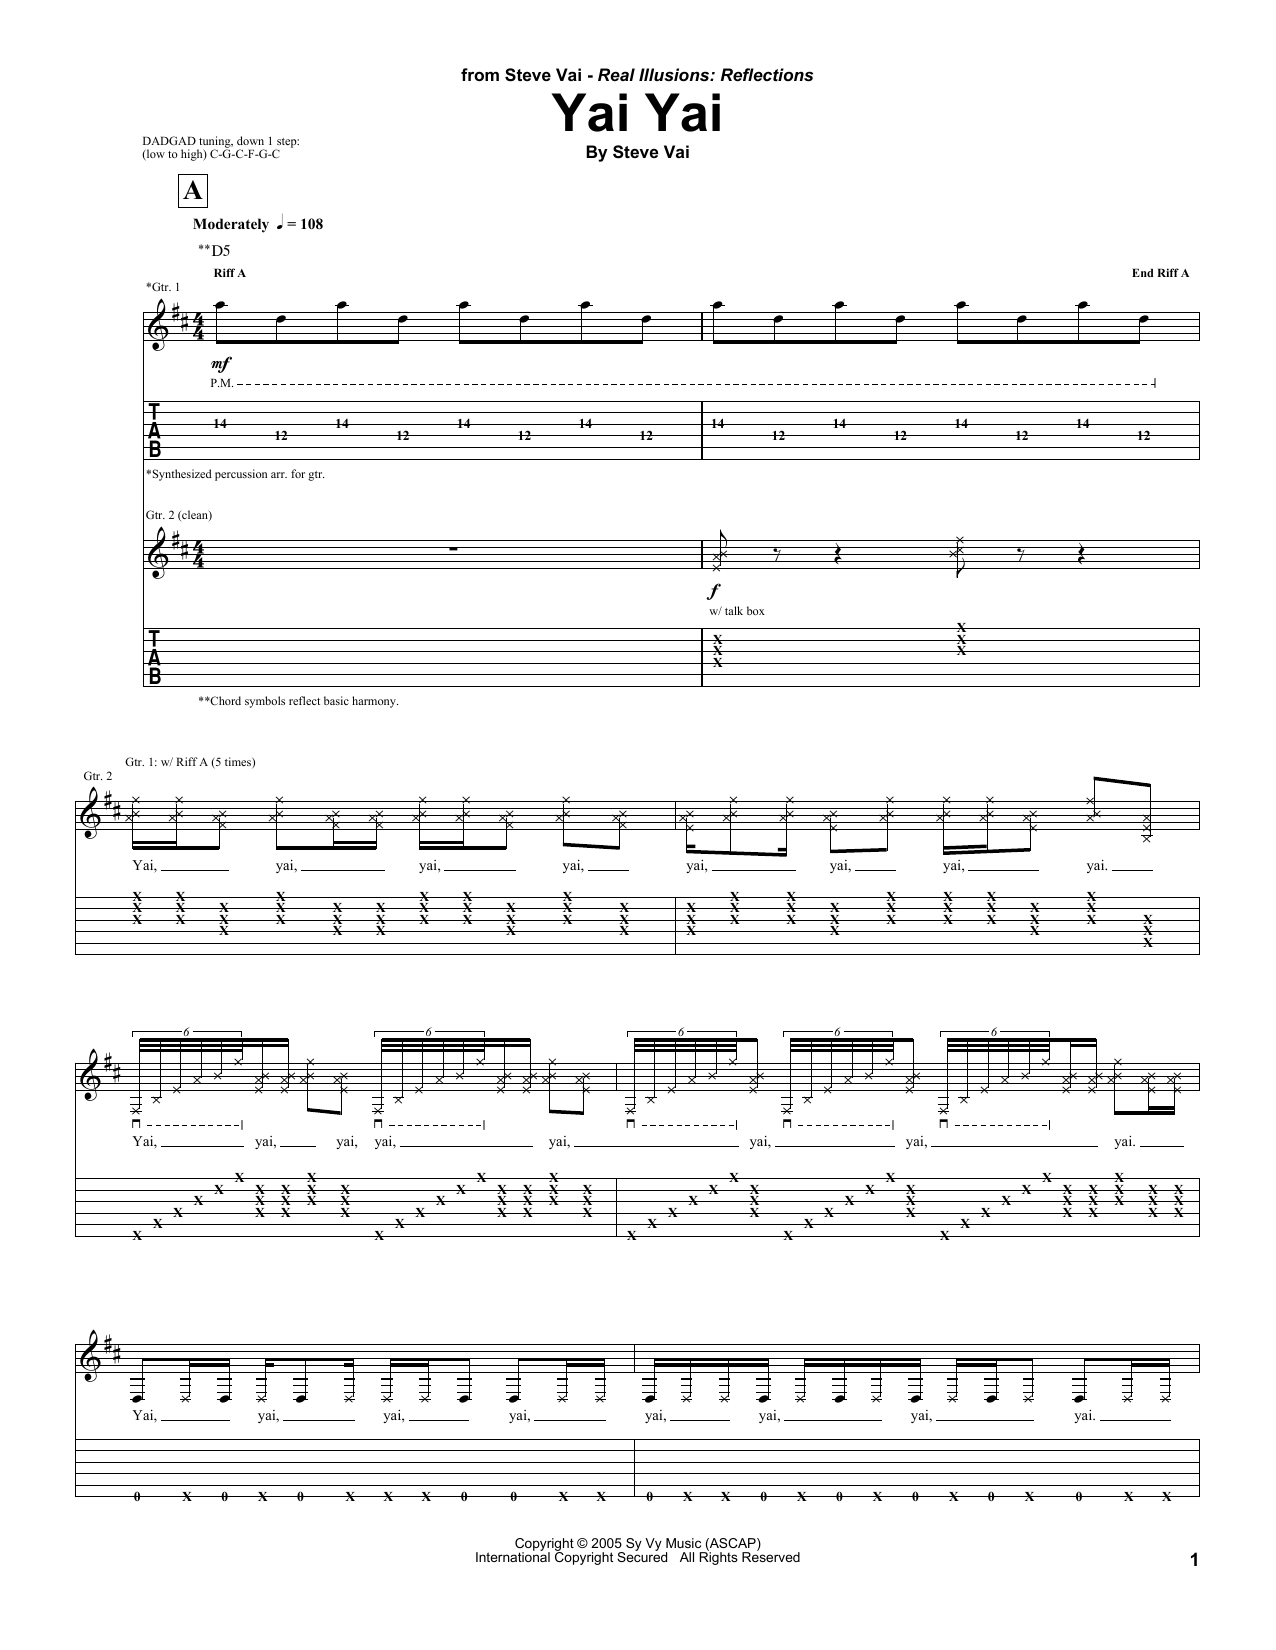 Steve Vai Yai Yai Sheet Music Notes & Chords for Guitar Tab - Download or Print PDF